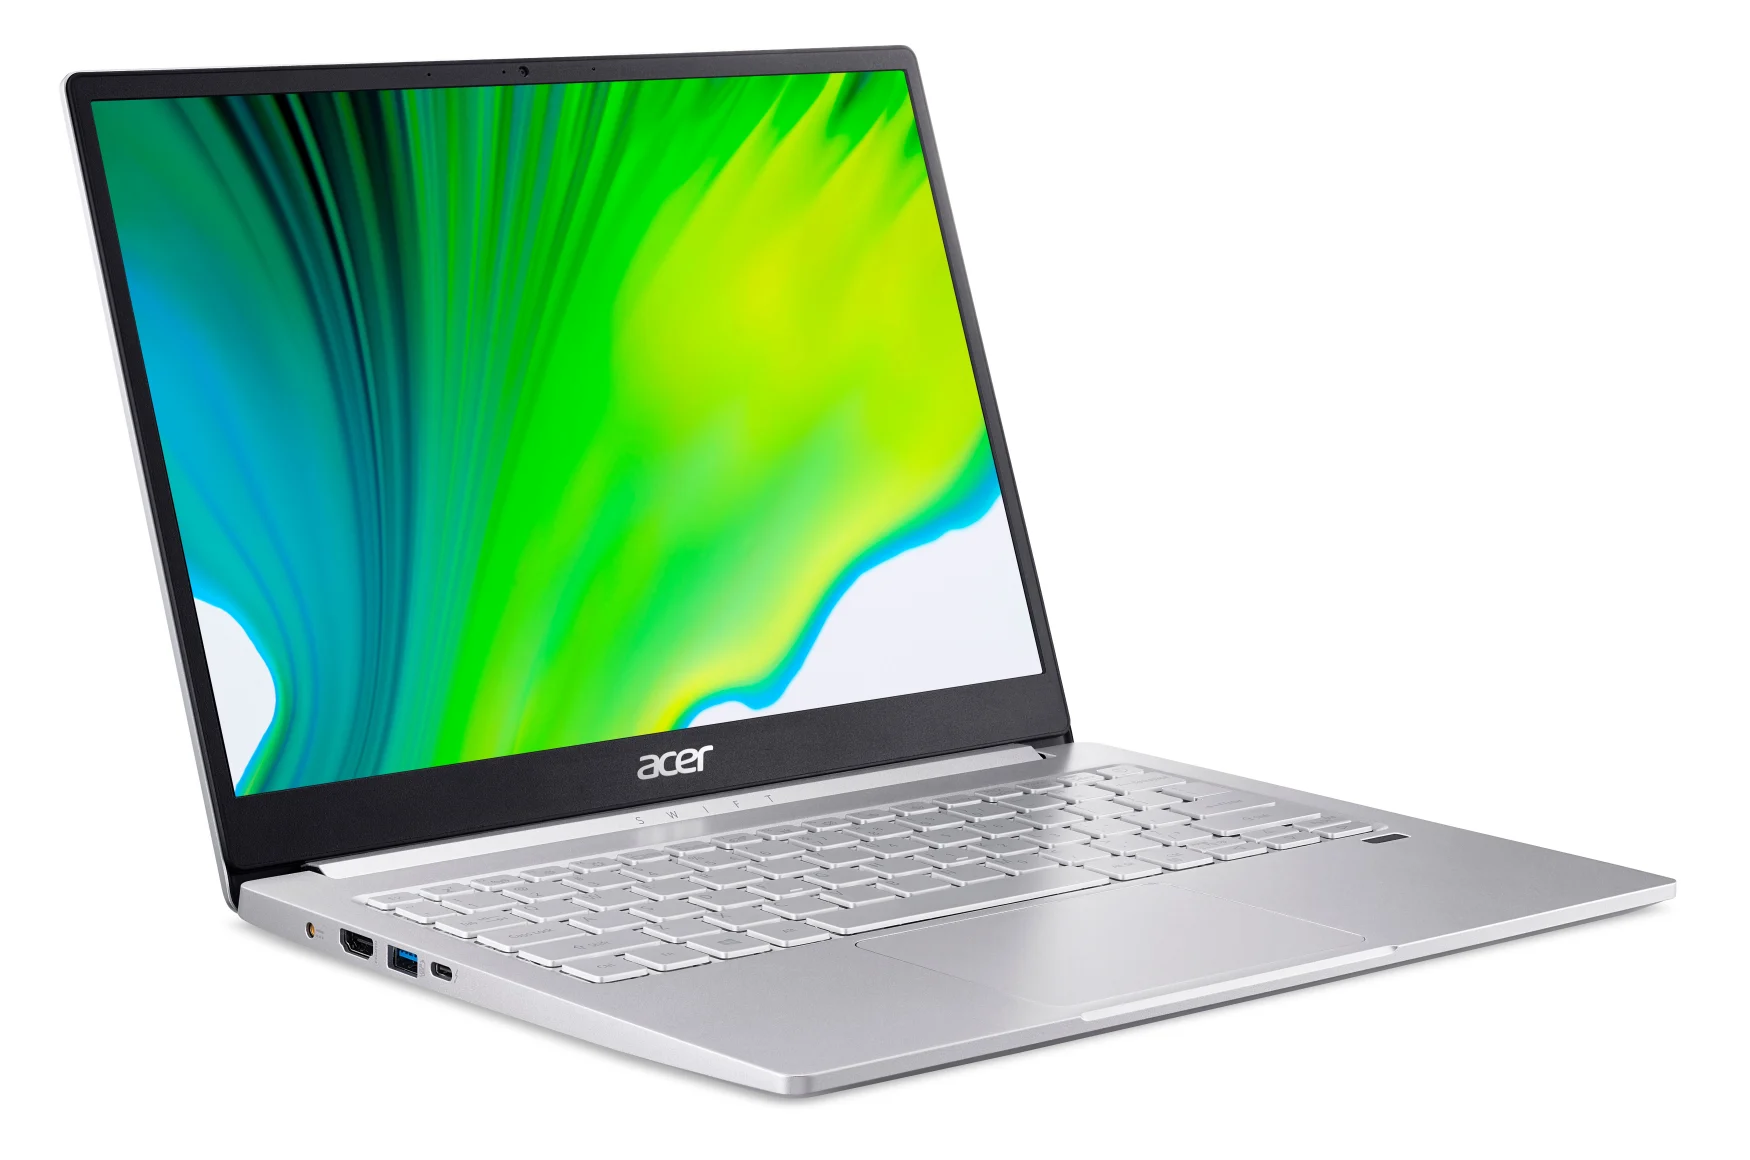 One of Acer's latest Swift 3 laptops (model SF313-53)